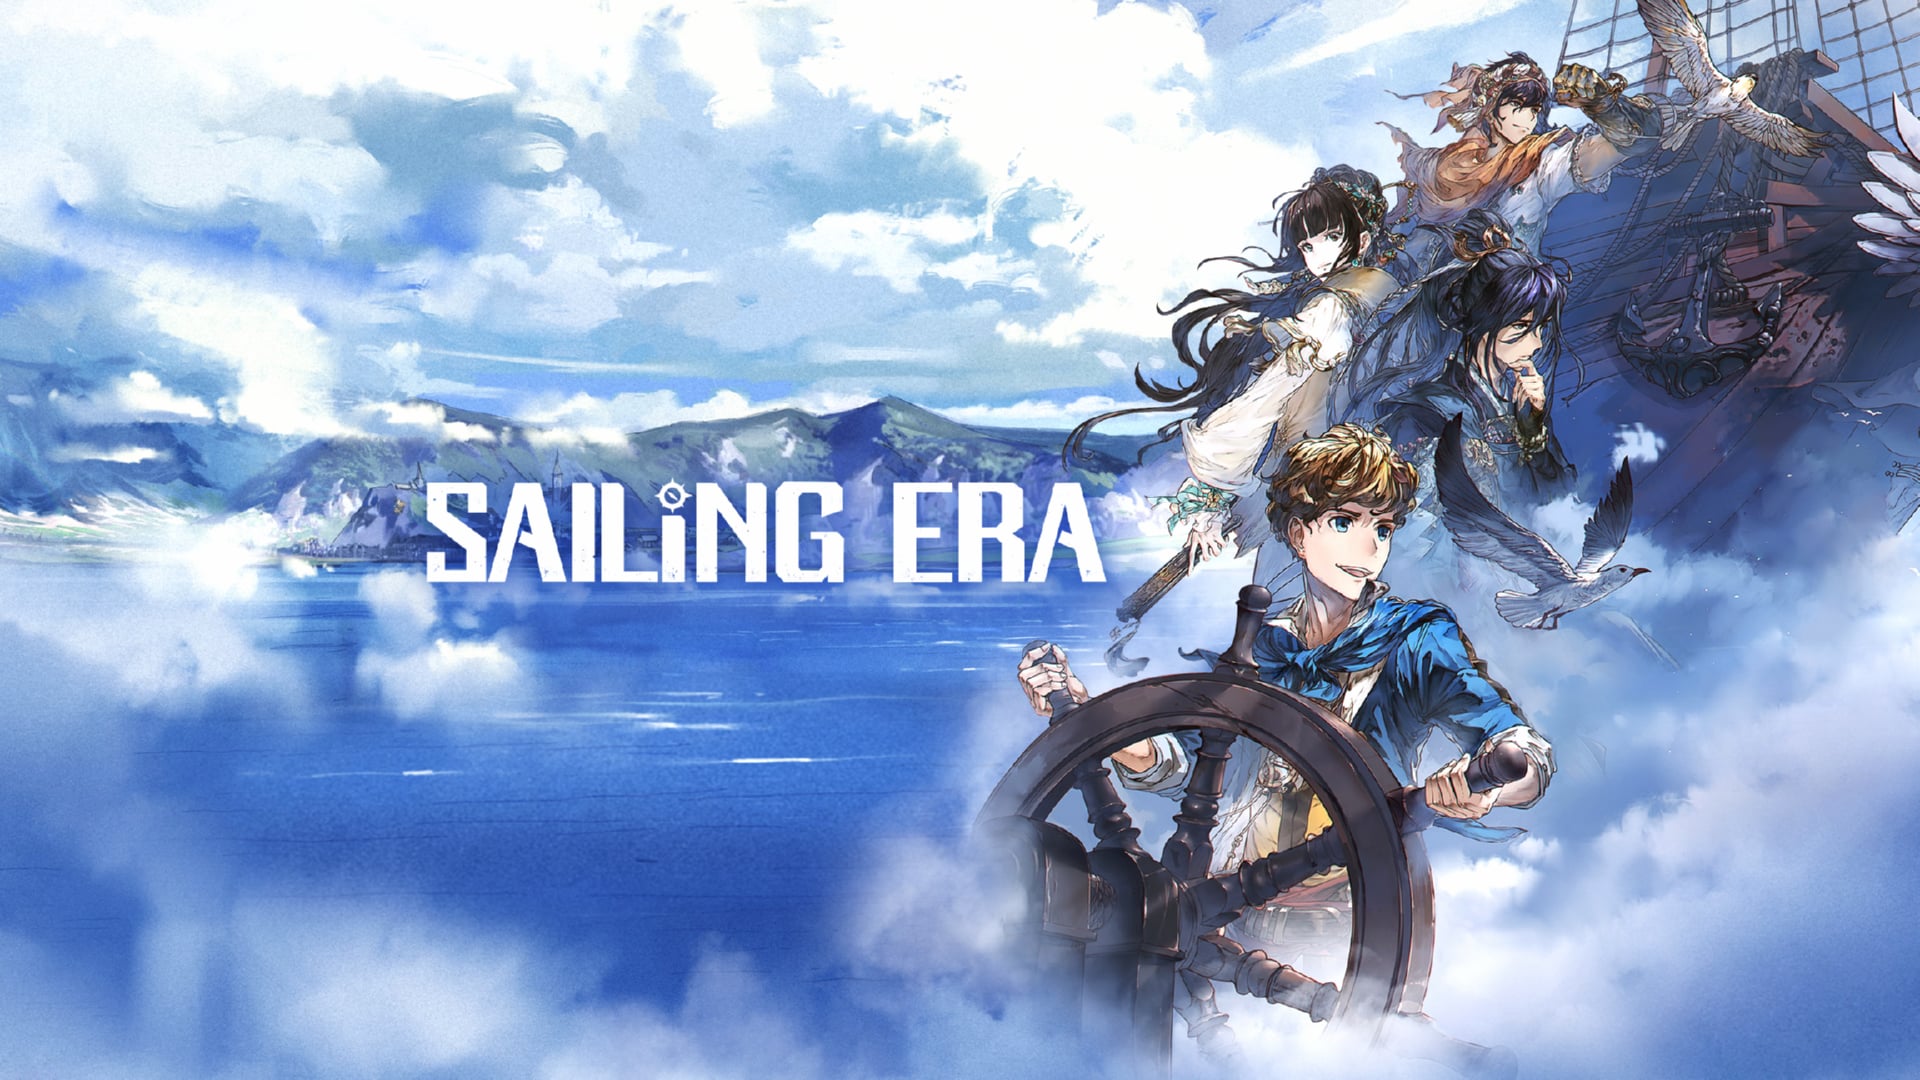 Sailing Era at 1280 x 960 size wallpapers HD quality